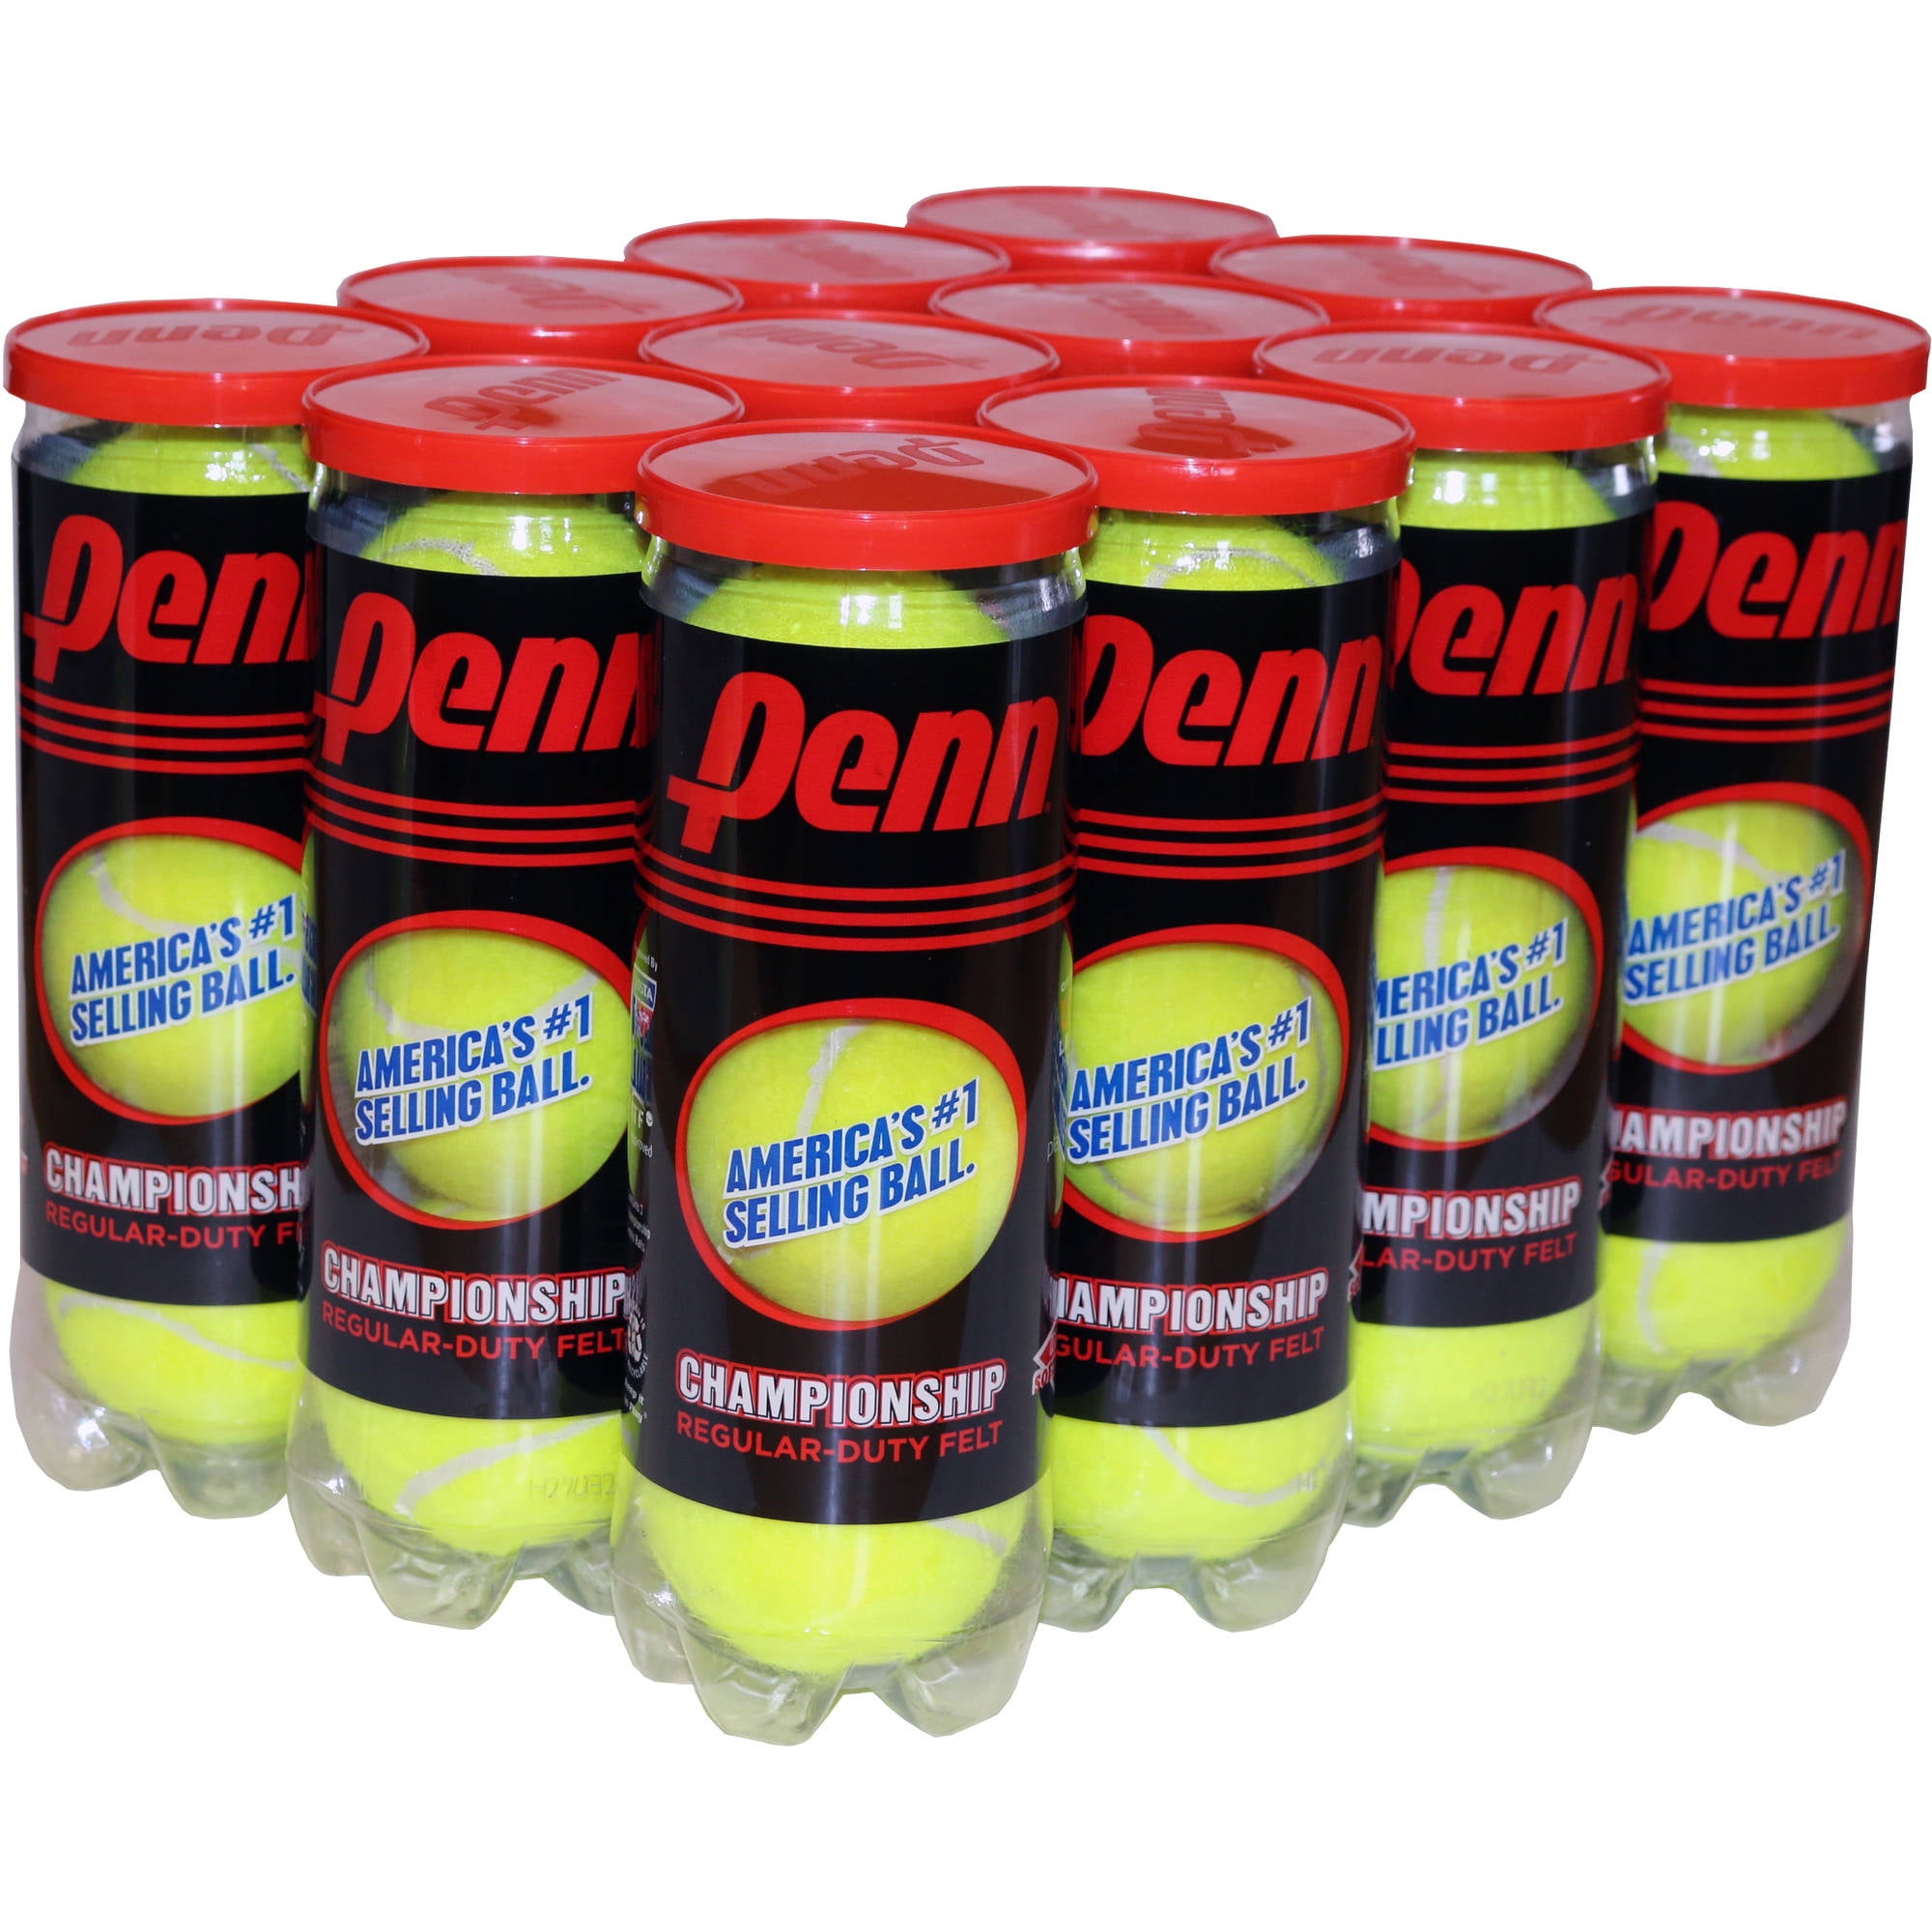 Penn Championship Extra Duty Felt USTA League Official Tennis Balls 2pk/6 Balls 